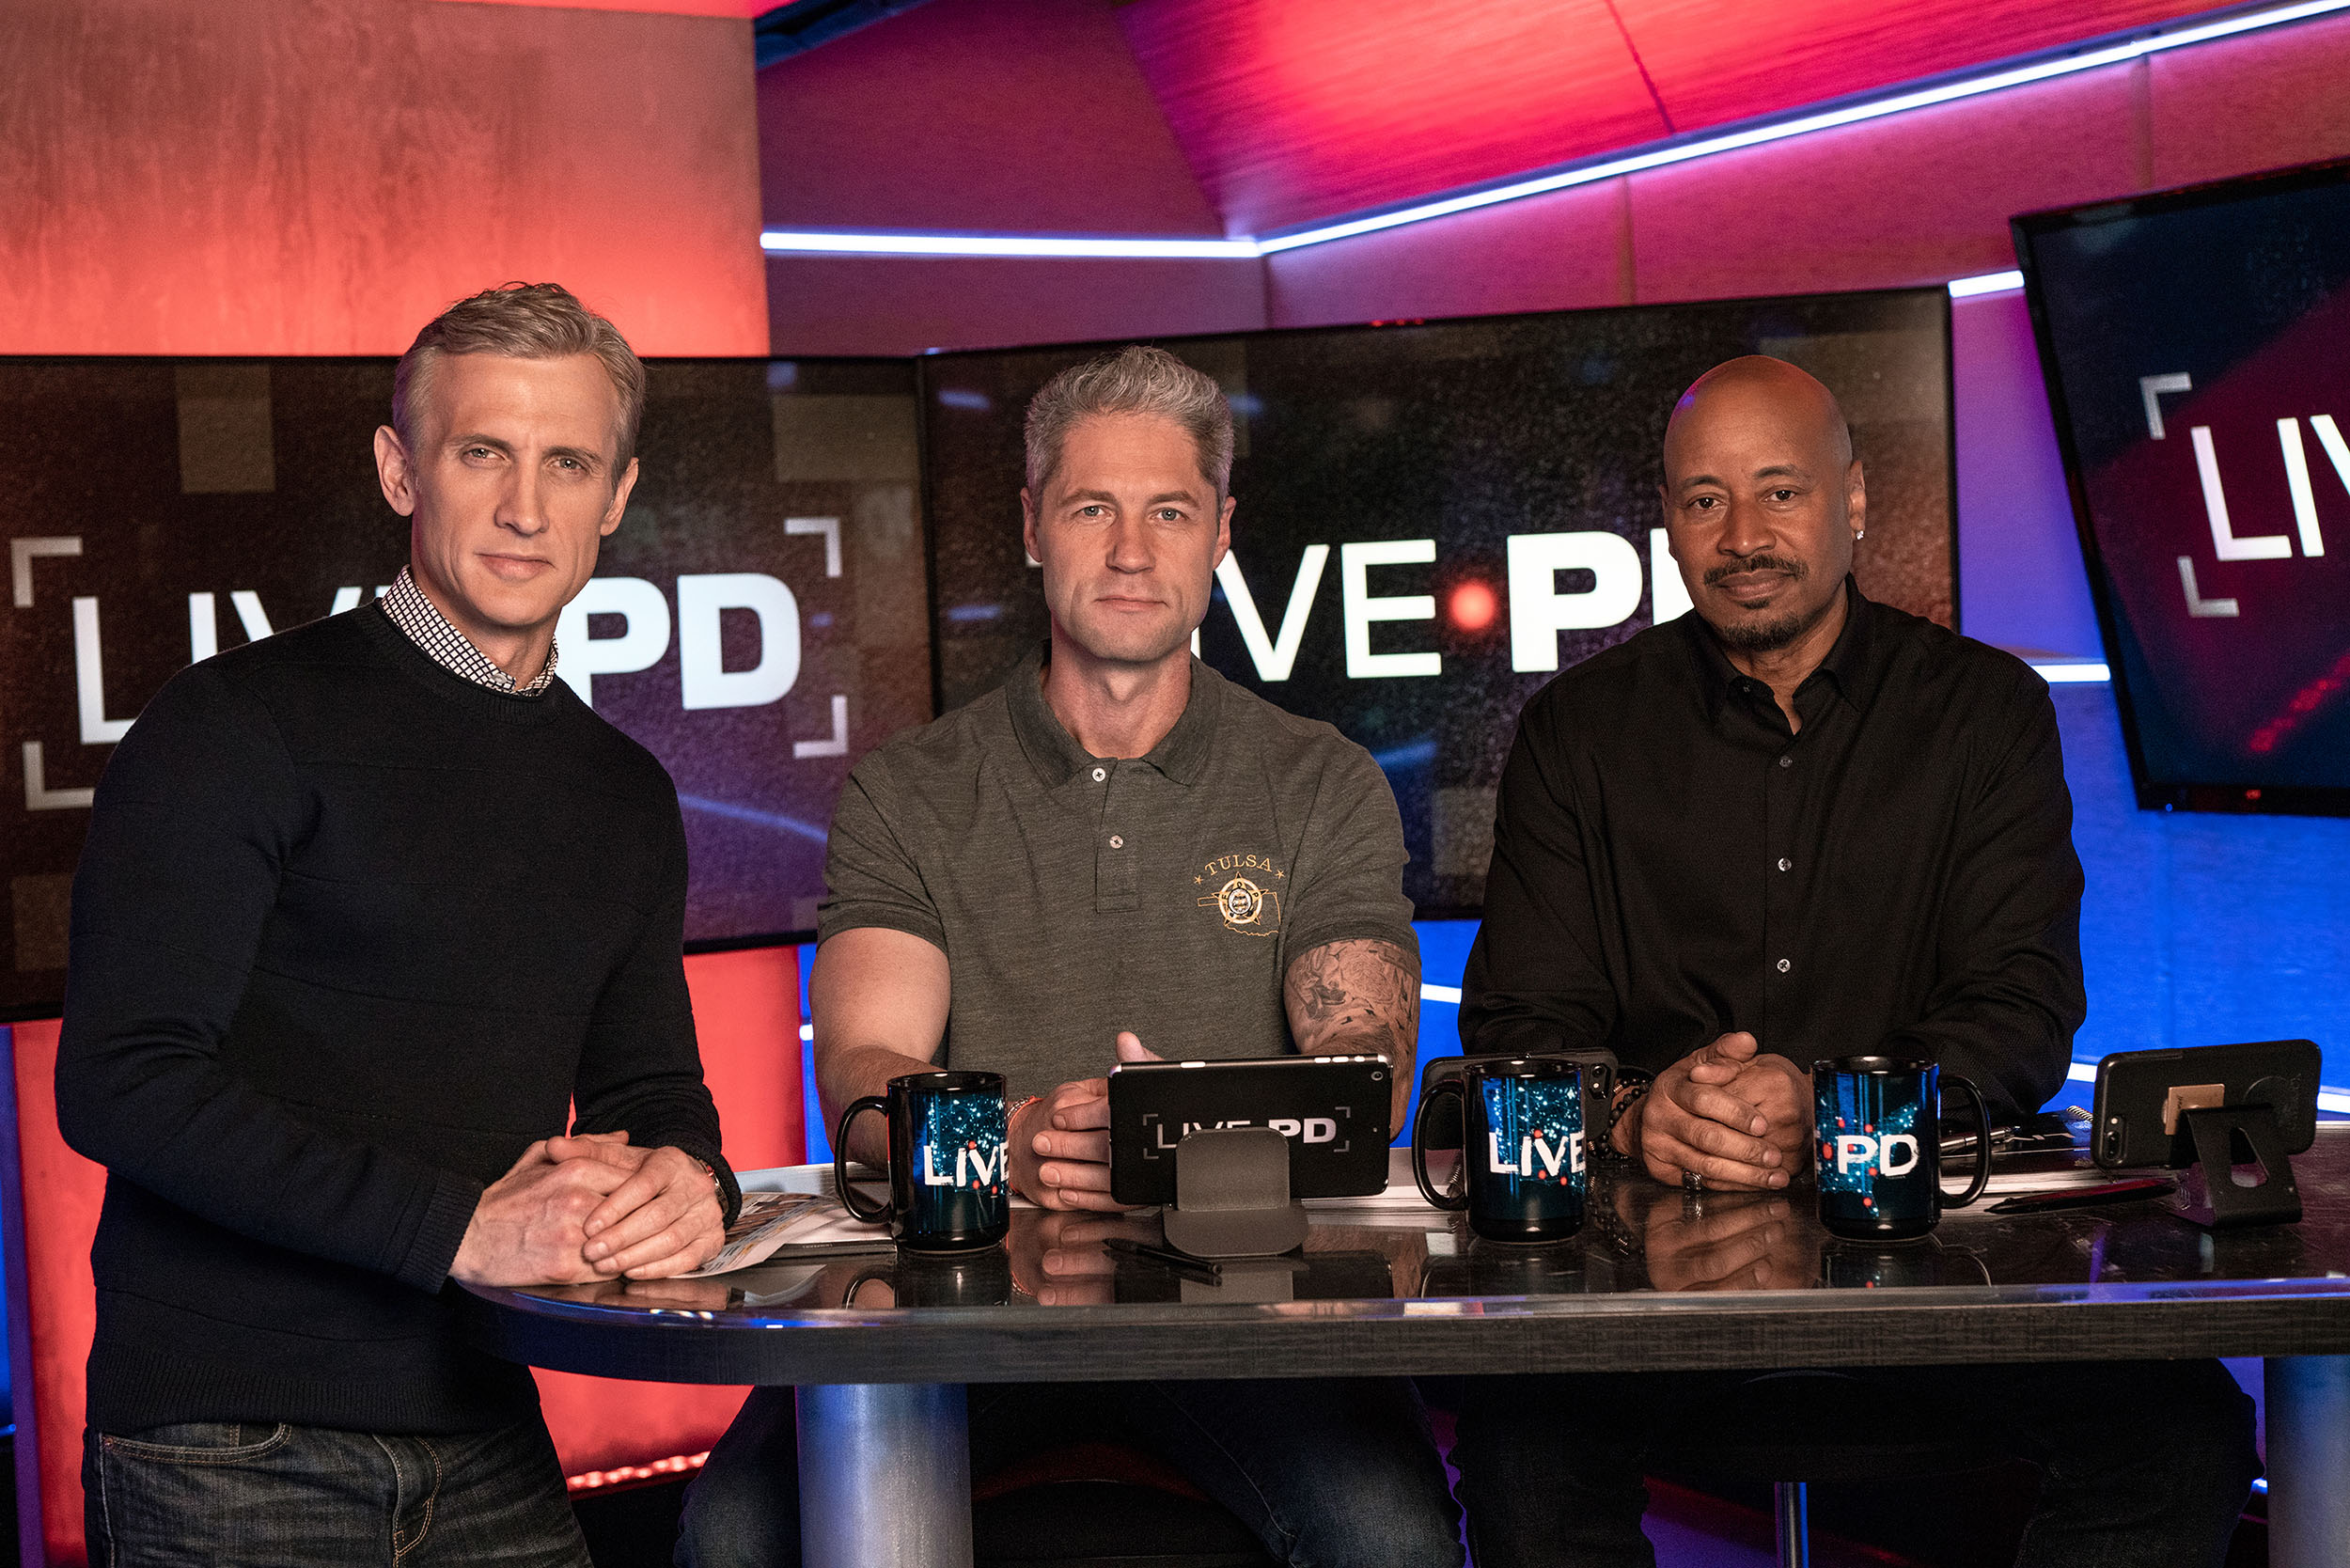 A&E's "Live PD" Cast: From left: Dan Abrams, Sean "Sticks" Larkin, and Tom Morris Jr.